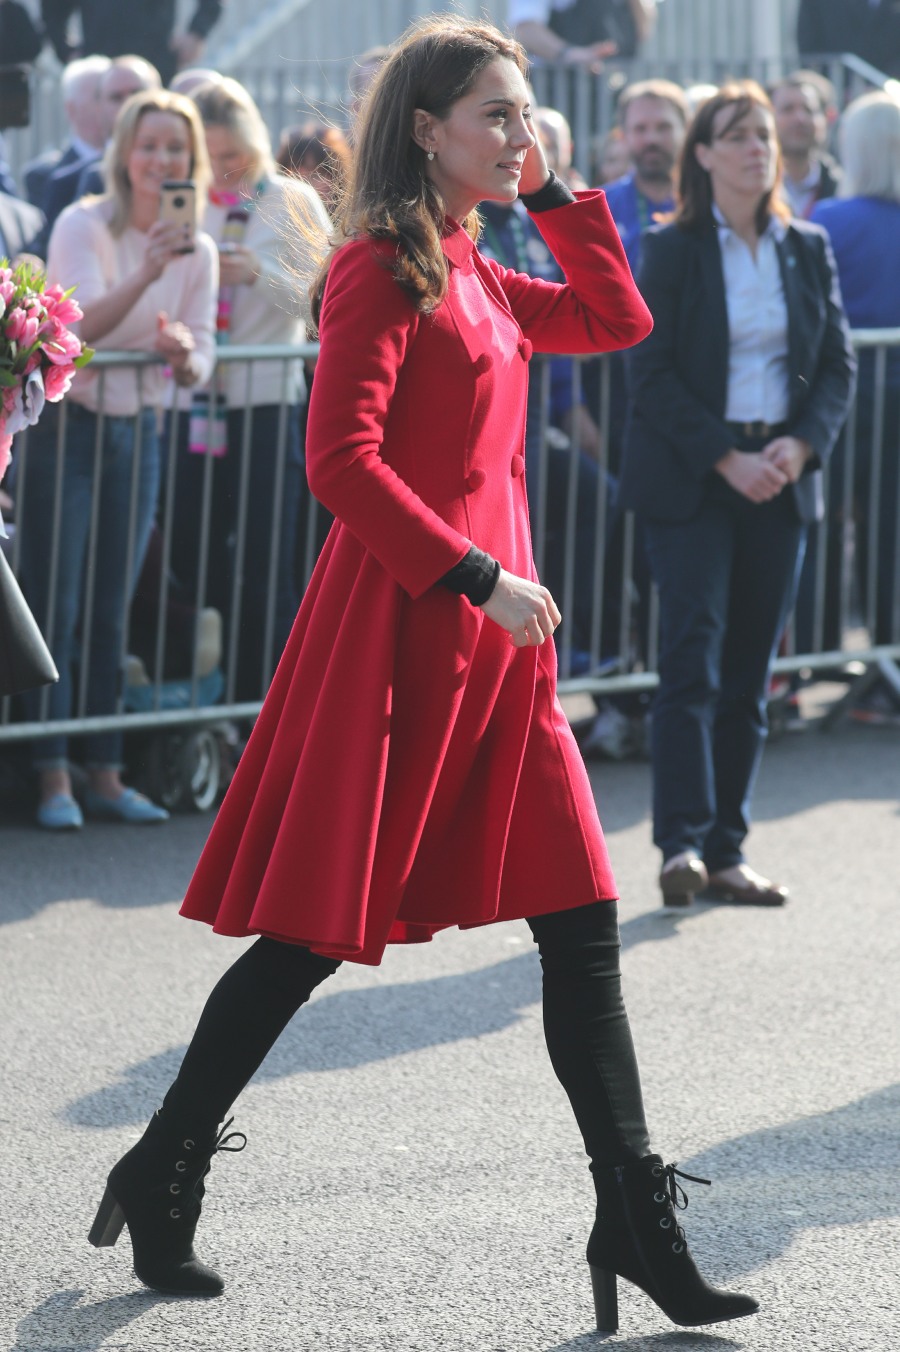 The Duke and Duchess of Cambridge visit Windsor Park in Belfast